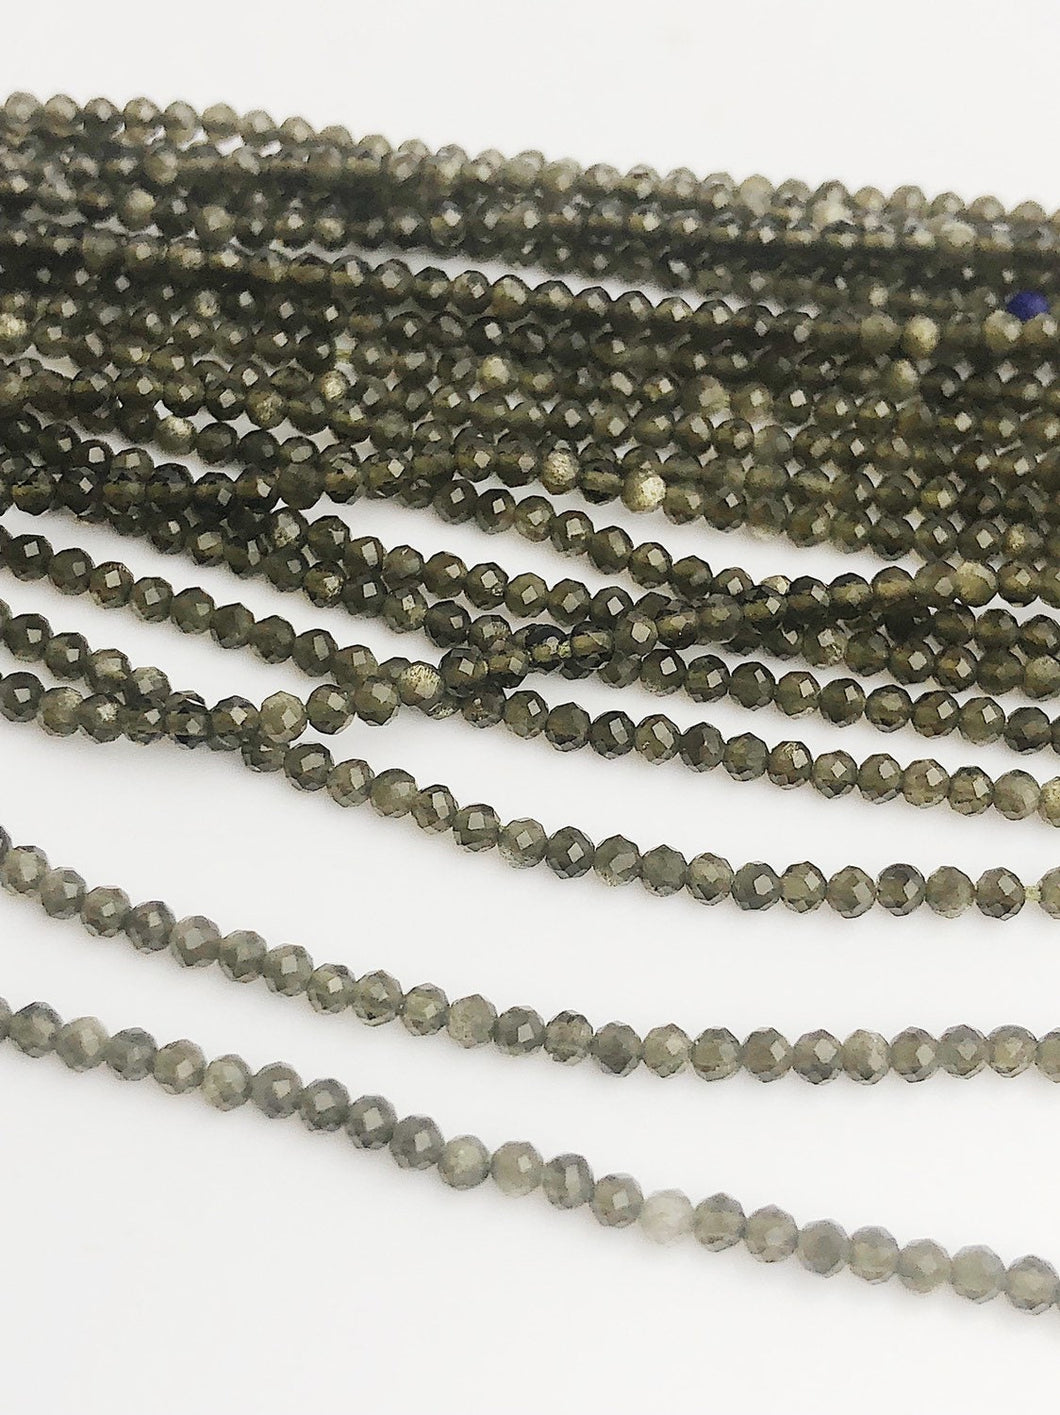 HALF OFF SALE - Cats Eye Gemstone Beads, Full Strand, Semi Precious Gemstone, 13